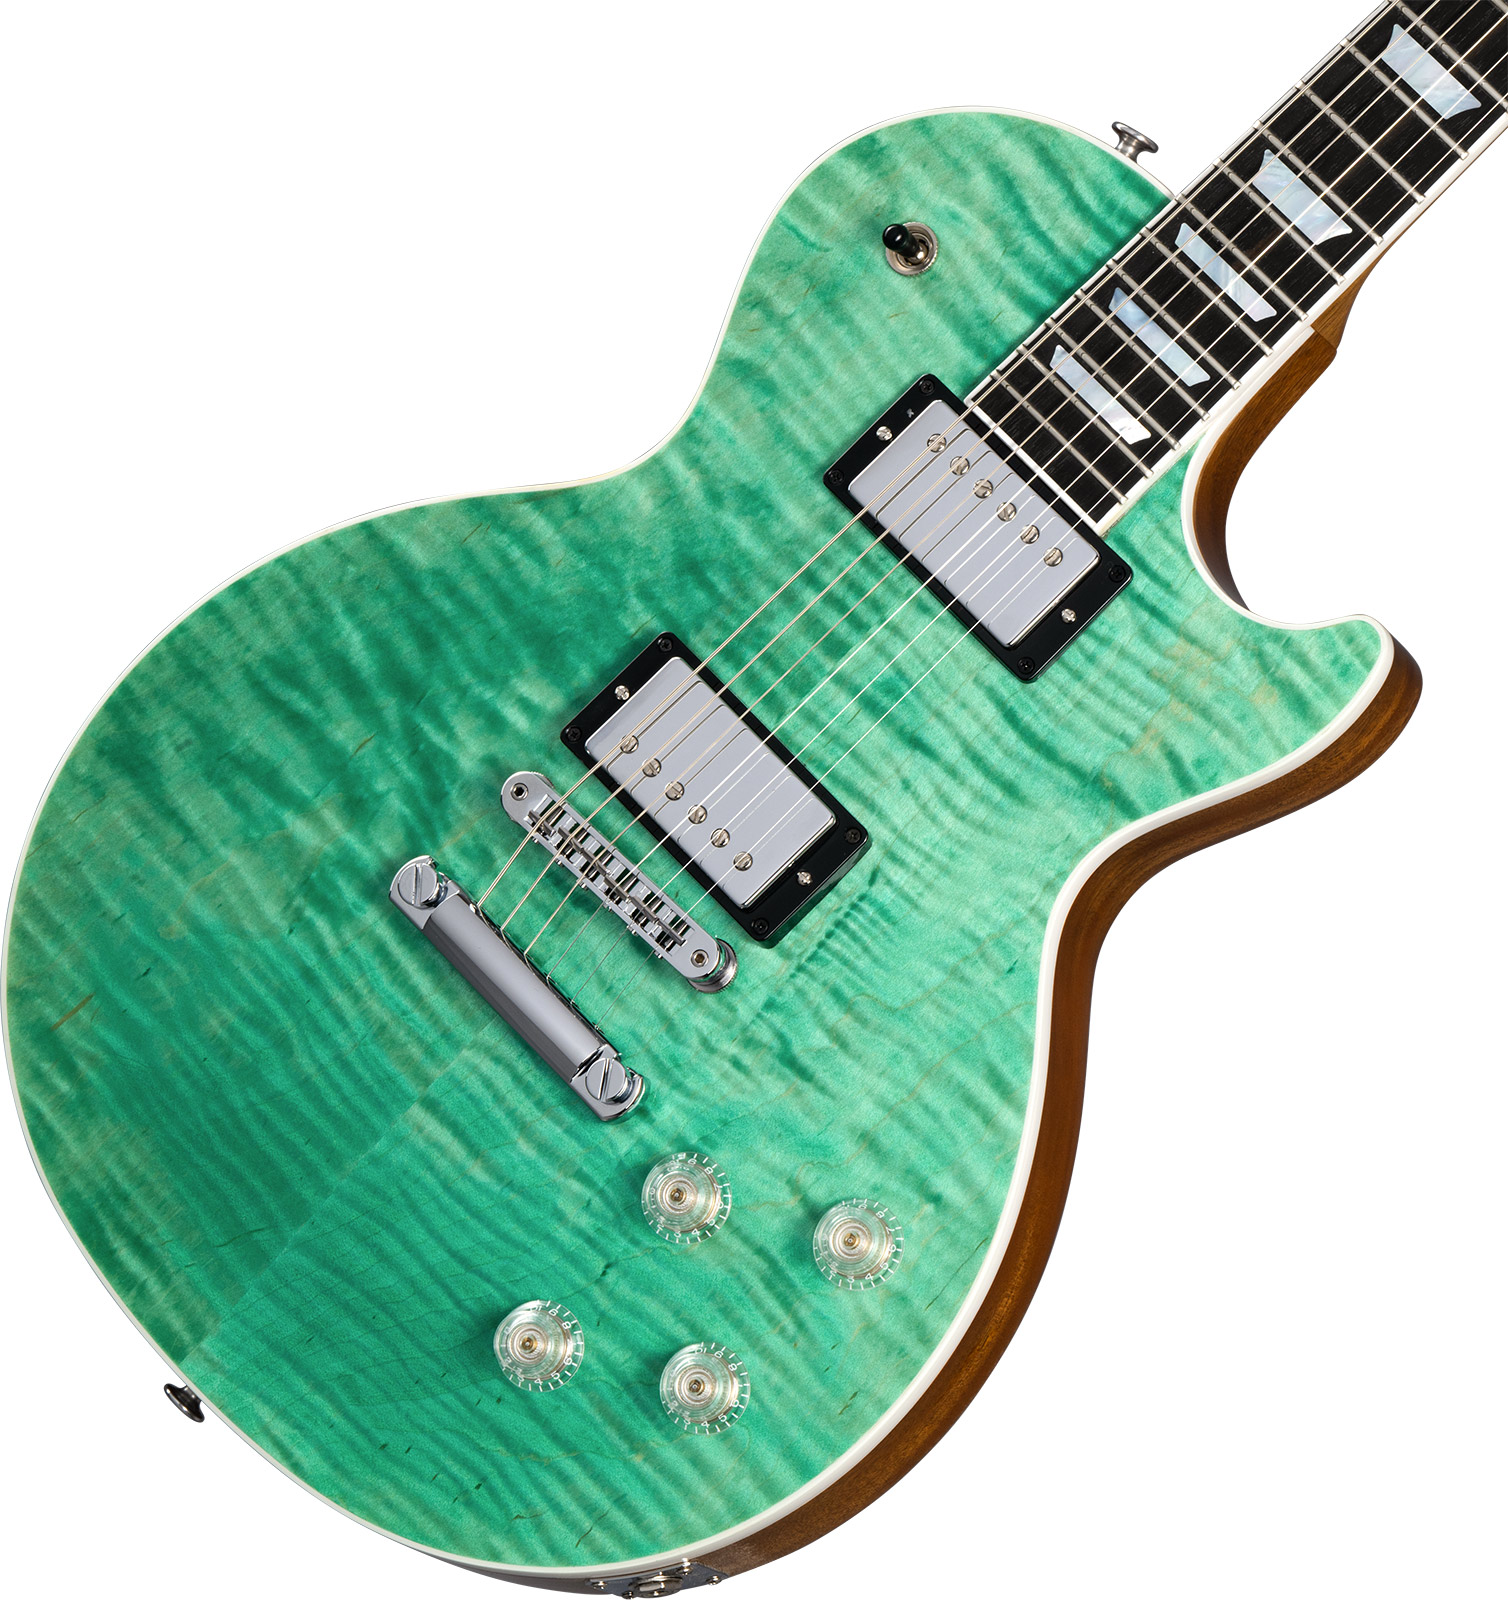 Gibson Les Paul Modern Figured 2h Ht Rw - Seafoam Green - Enkel gesneden elektrische gitaar - Variation 3